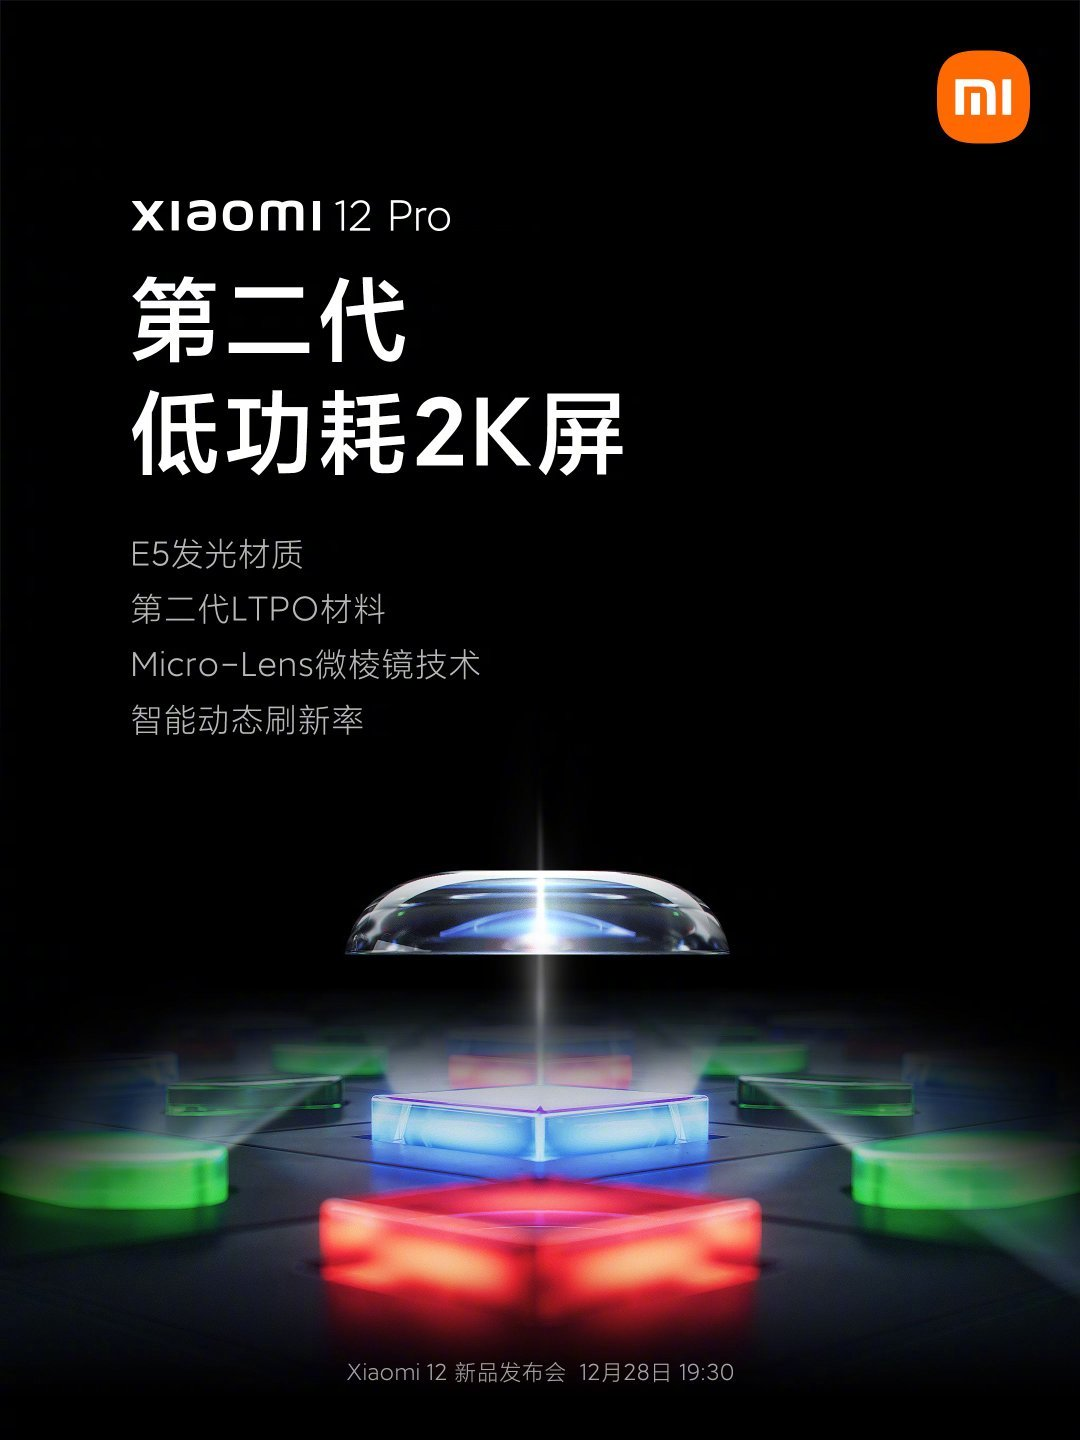 Xiaomi 12 Pro Display Specs